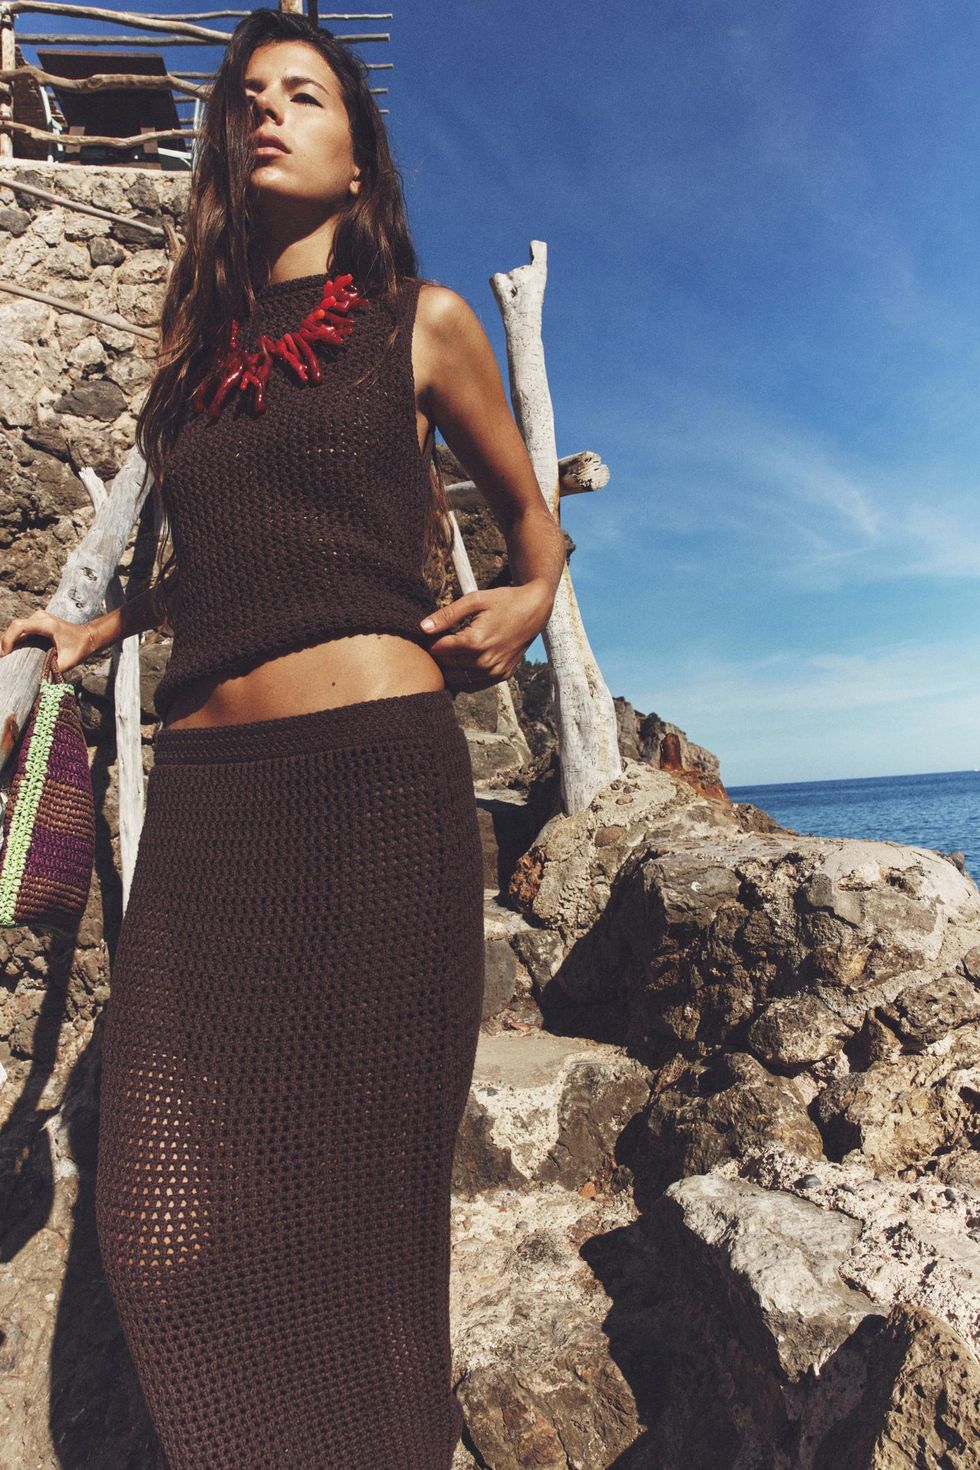 a woman in a garment holding a sword on a rocky beach